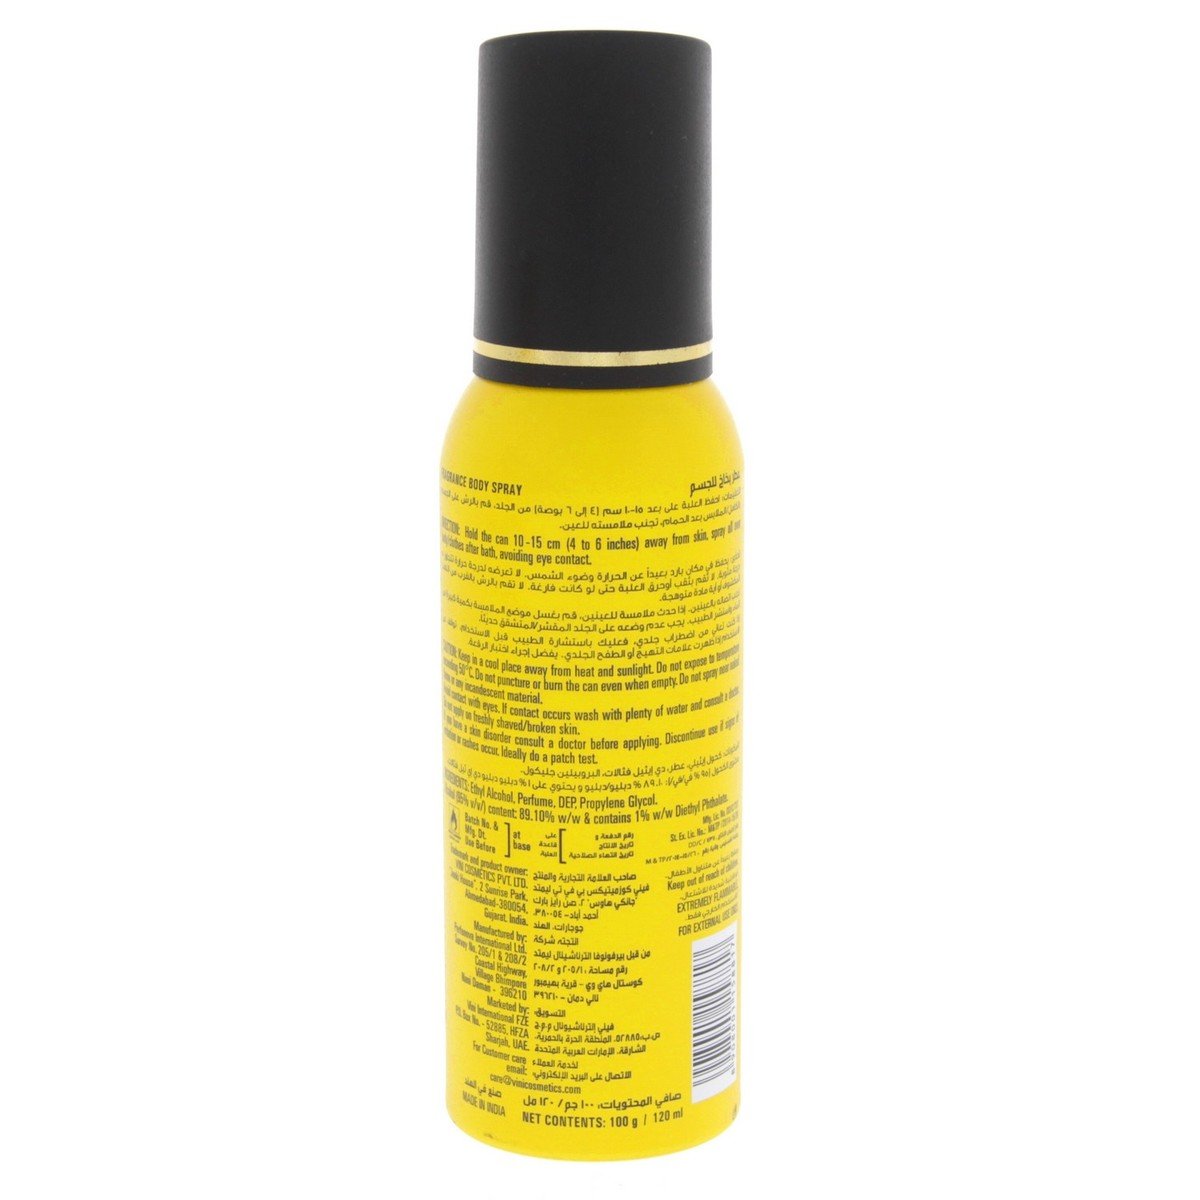 Fogg Dynamic Deo Spray For Men 120ml x 2pcs